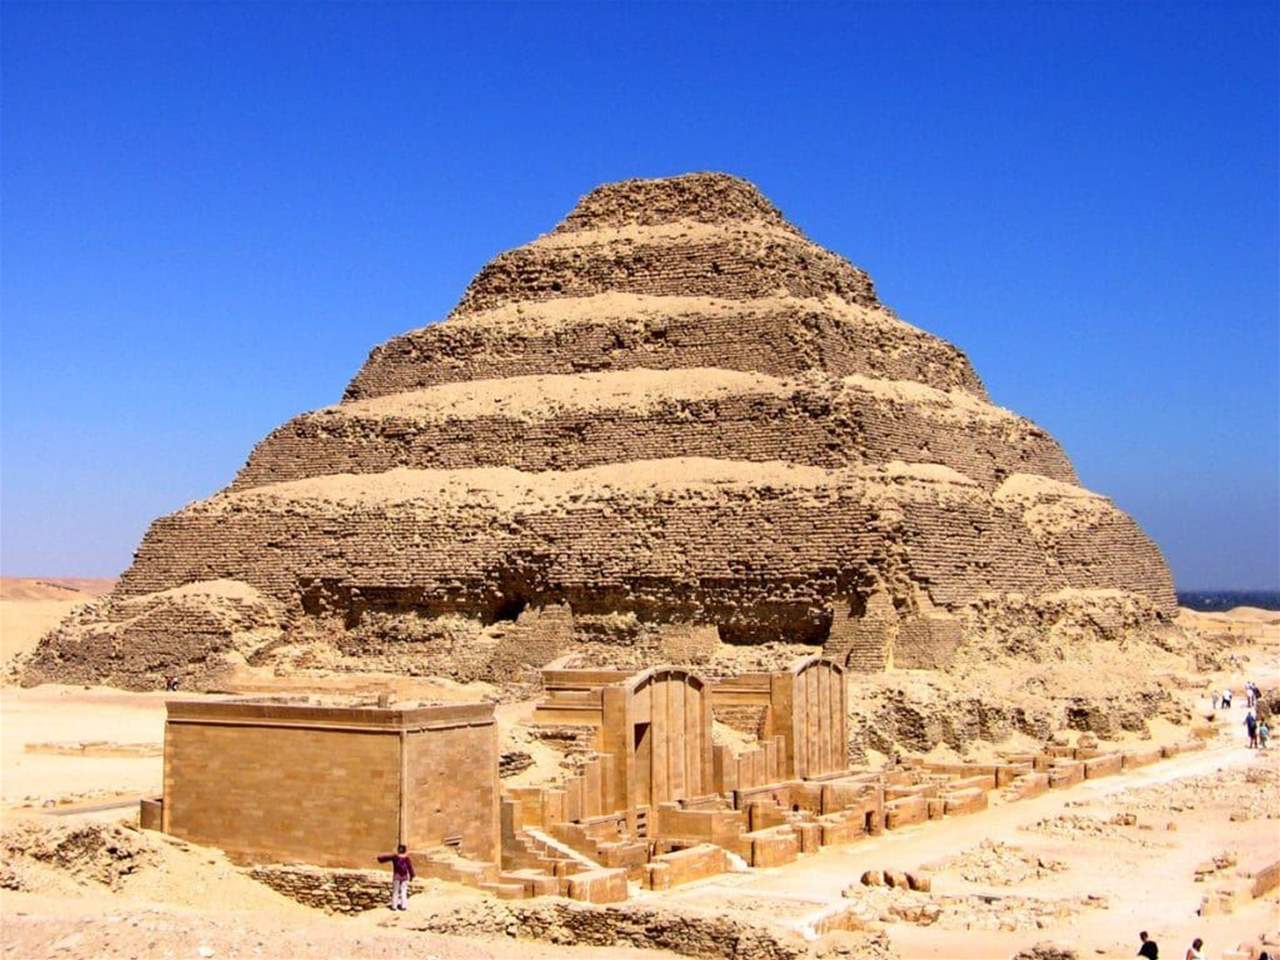 اكتشاف مدهش داخل "قصر الموتى المصري القديم"!